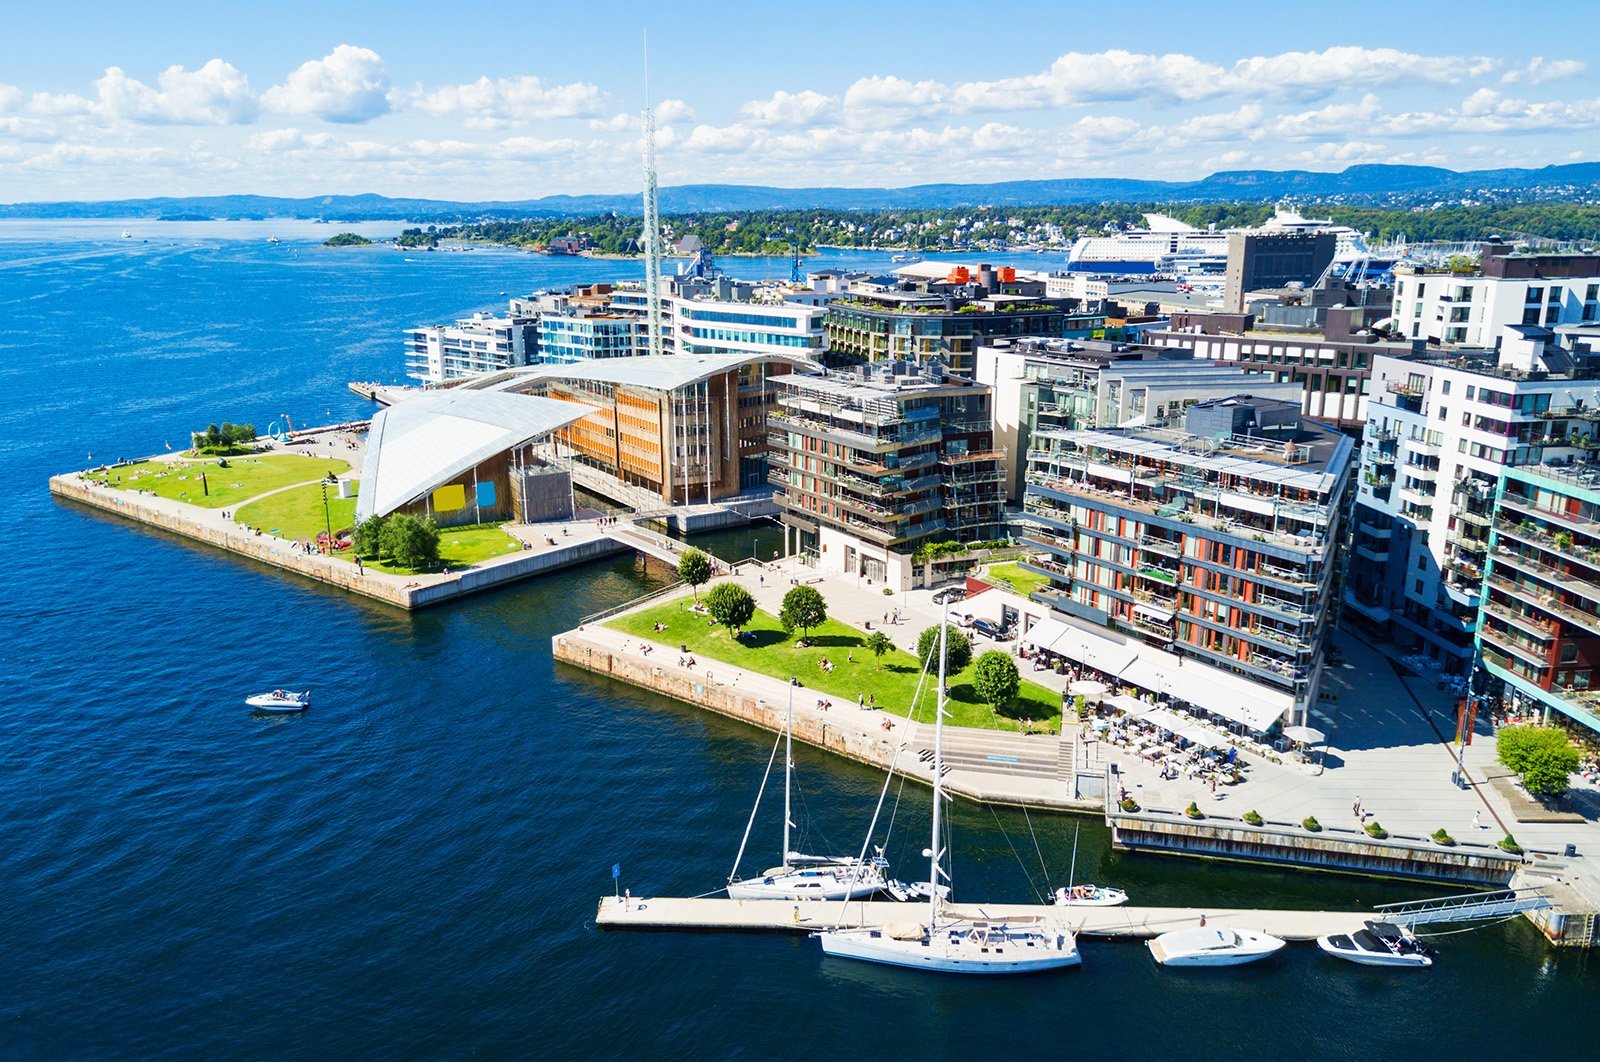 Oslo modern waterfront